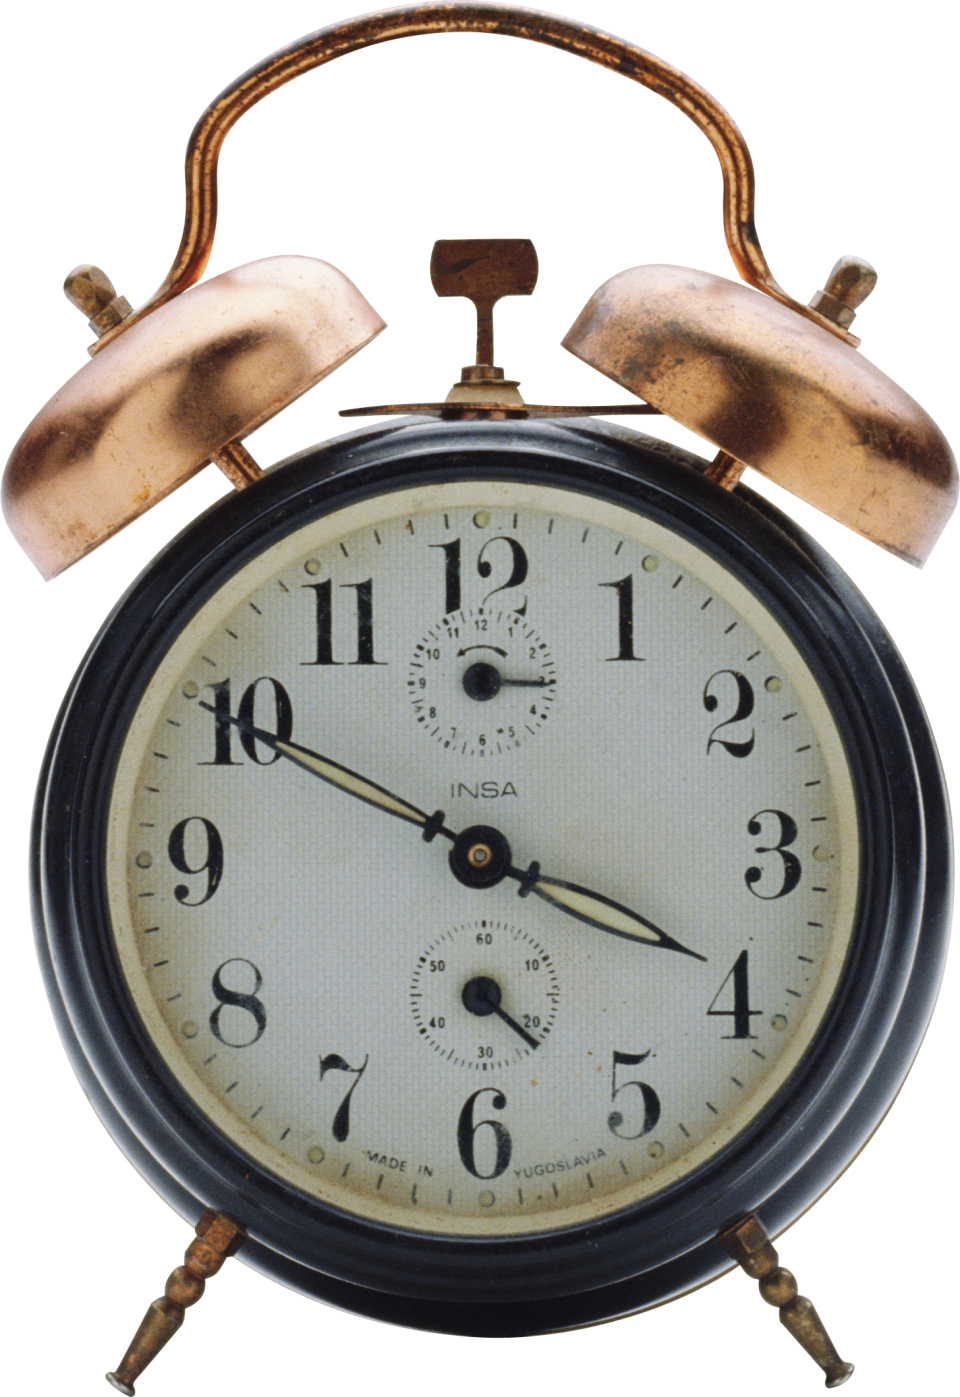 Black Alarm Clock PNG Image - PurePNG | Free transparent ...